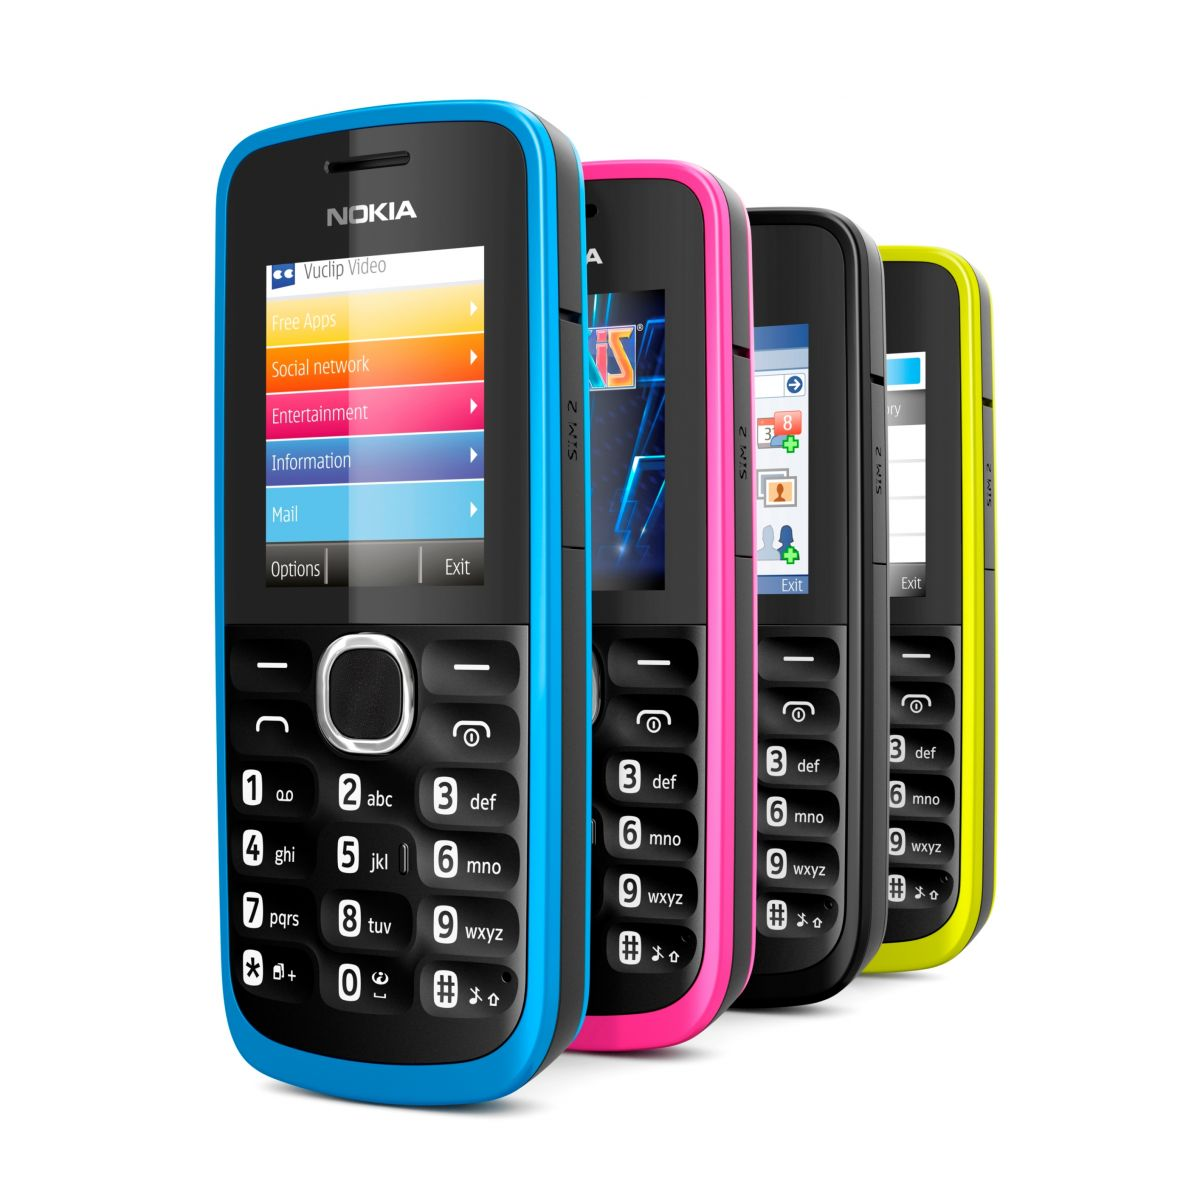 Nokia Phone 110 Chat chất lượng cao